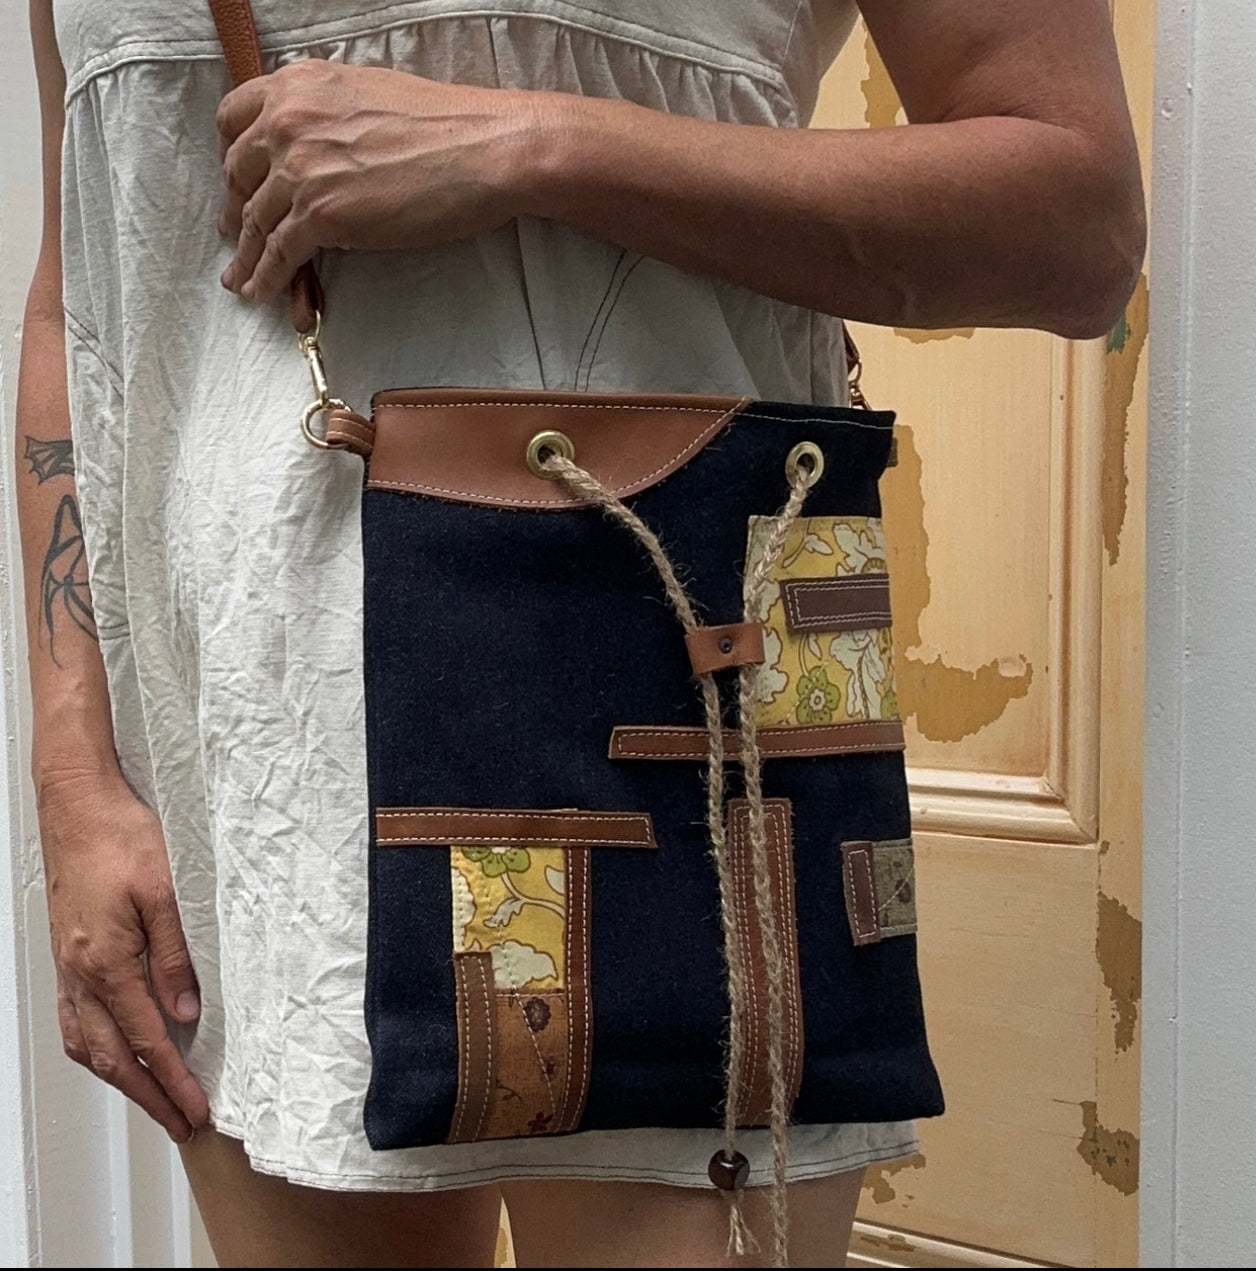 Somerset tote bag with adjustable strap - Denim Leather  - Large